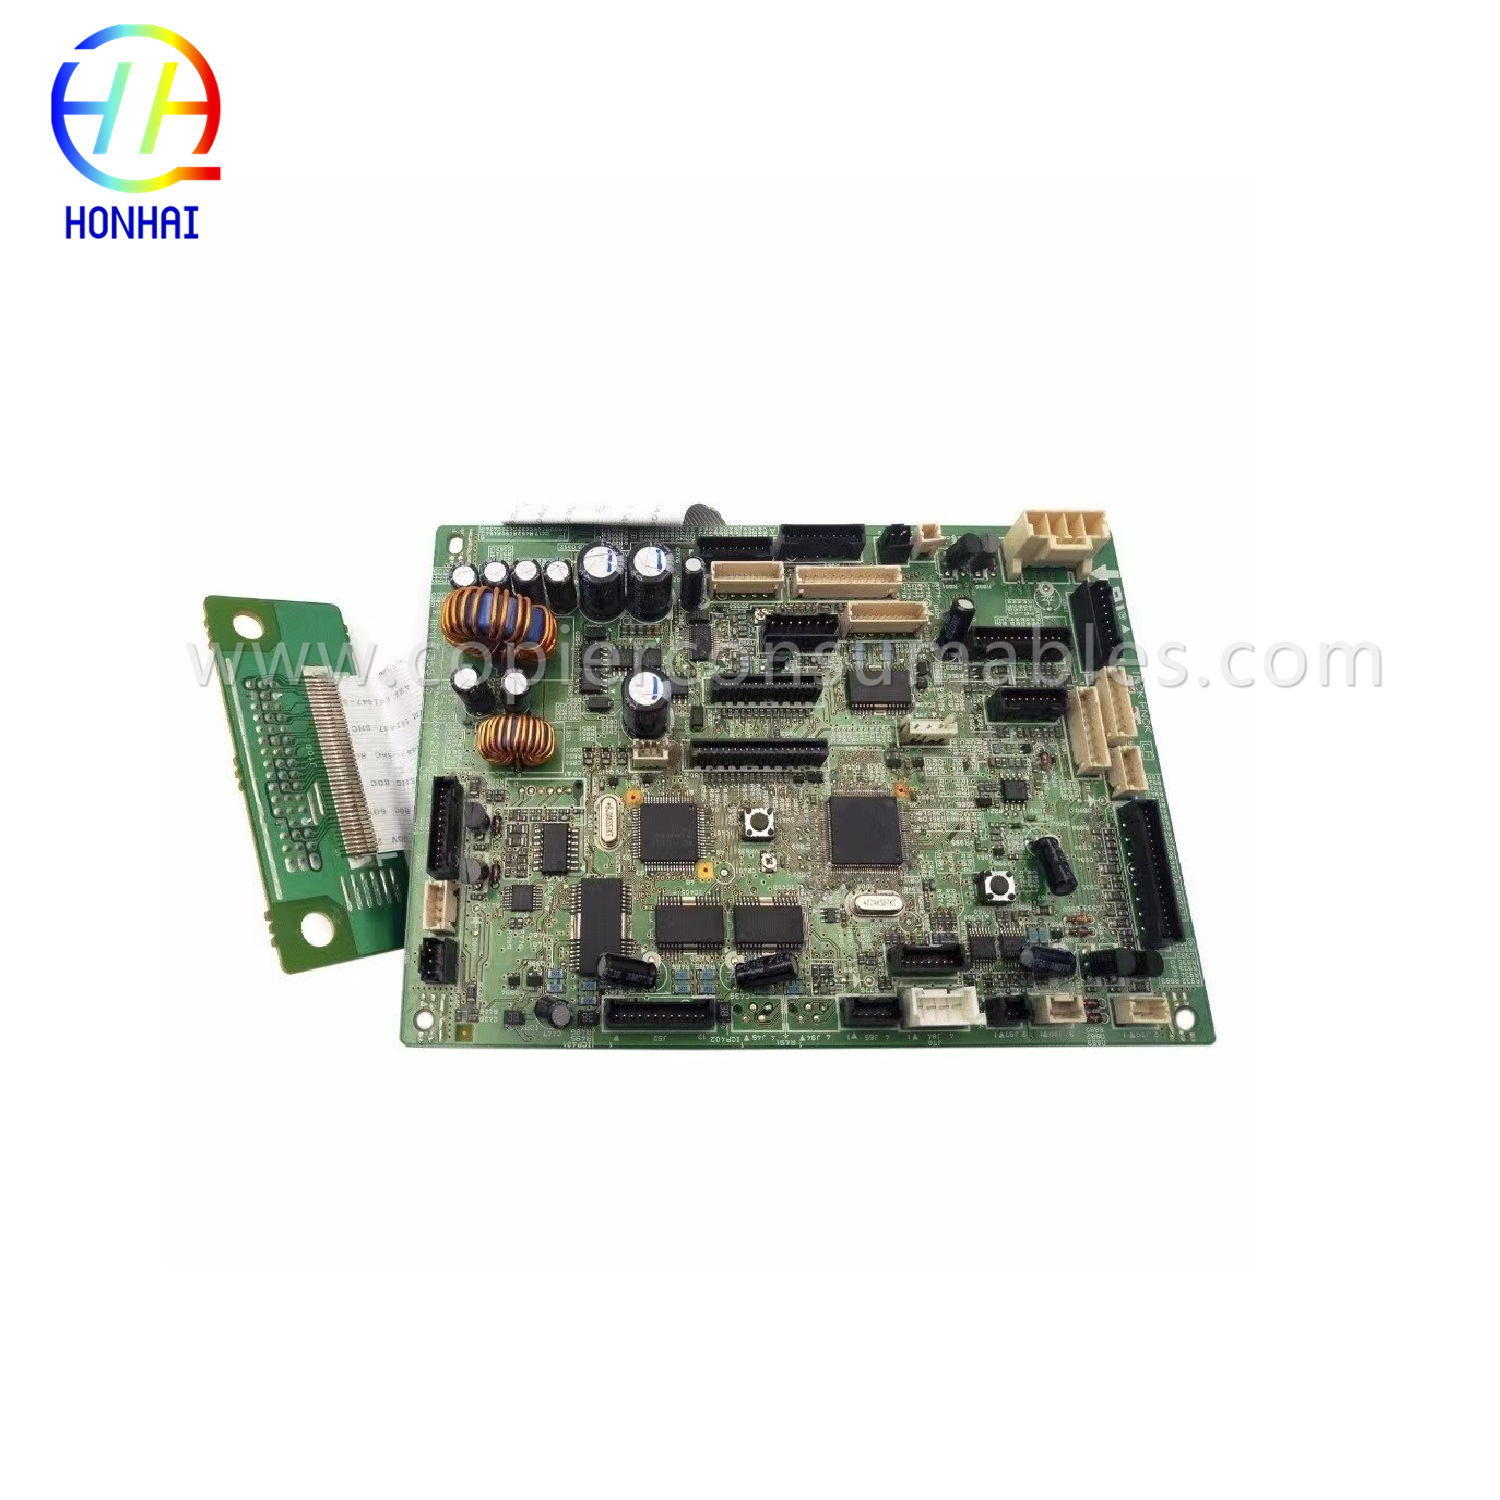 DC Controller Board HP Laserjet 4345 M4345-ի համար (RM1-1355-000CN RM1-1356-000CN RM1-1354-000CN)